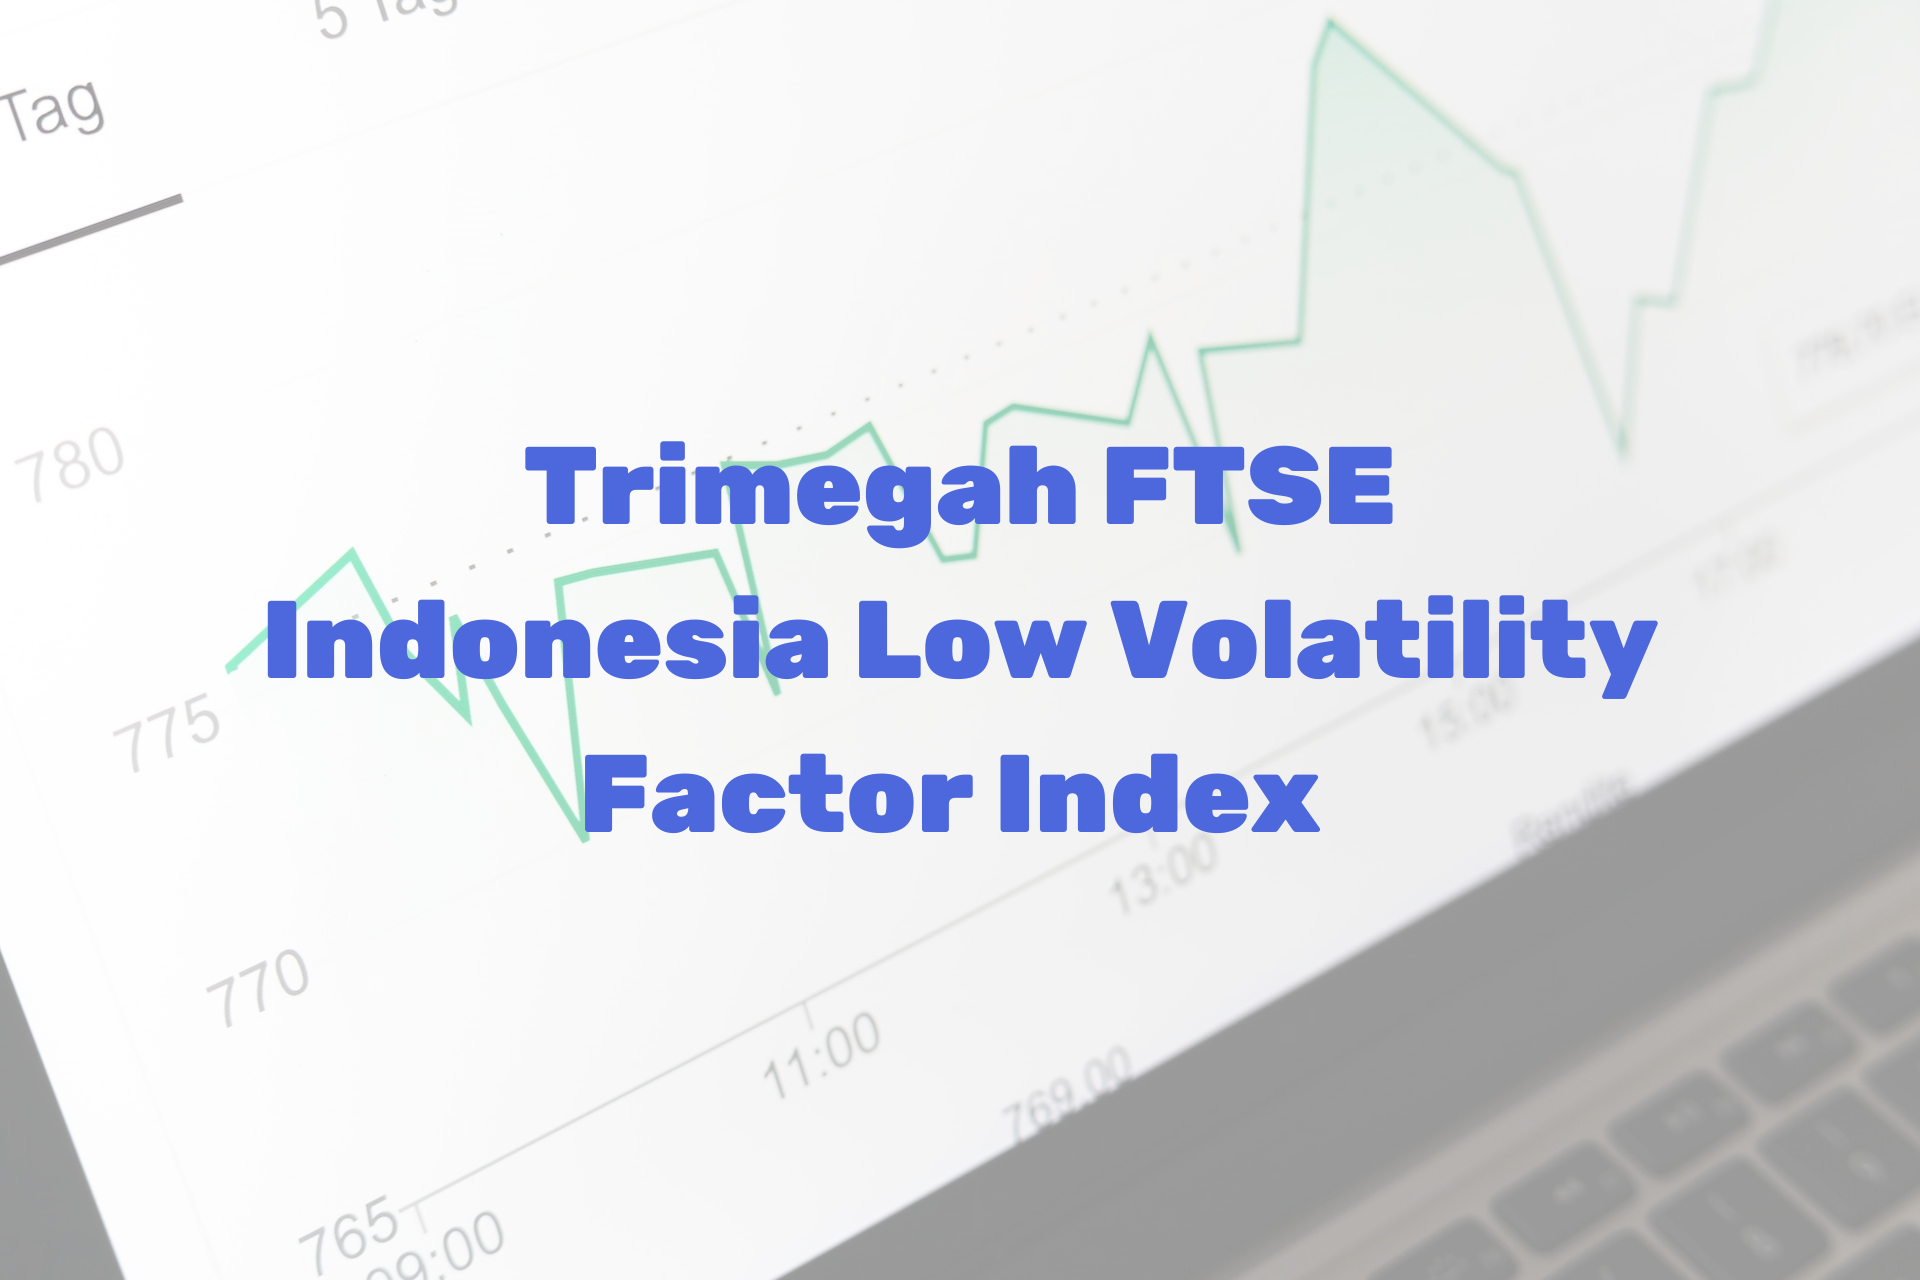 Gambar Kulik Reksa Dana: Trimegah FTSE Indonesia Low Volatility Factor Index